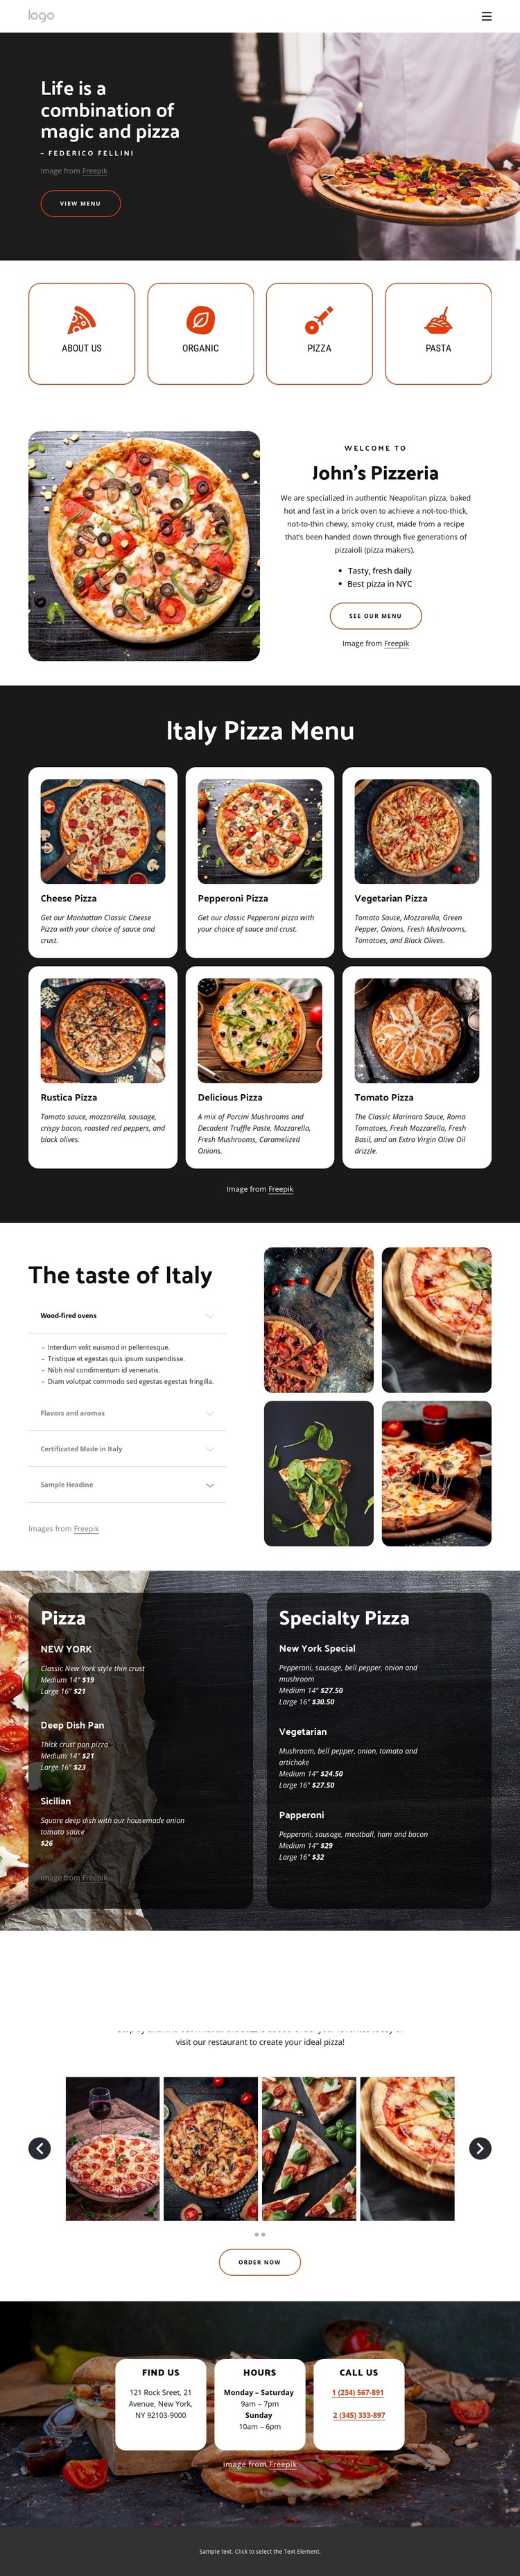 Family-friendly pizza restaurant Web Design